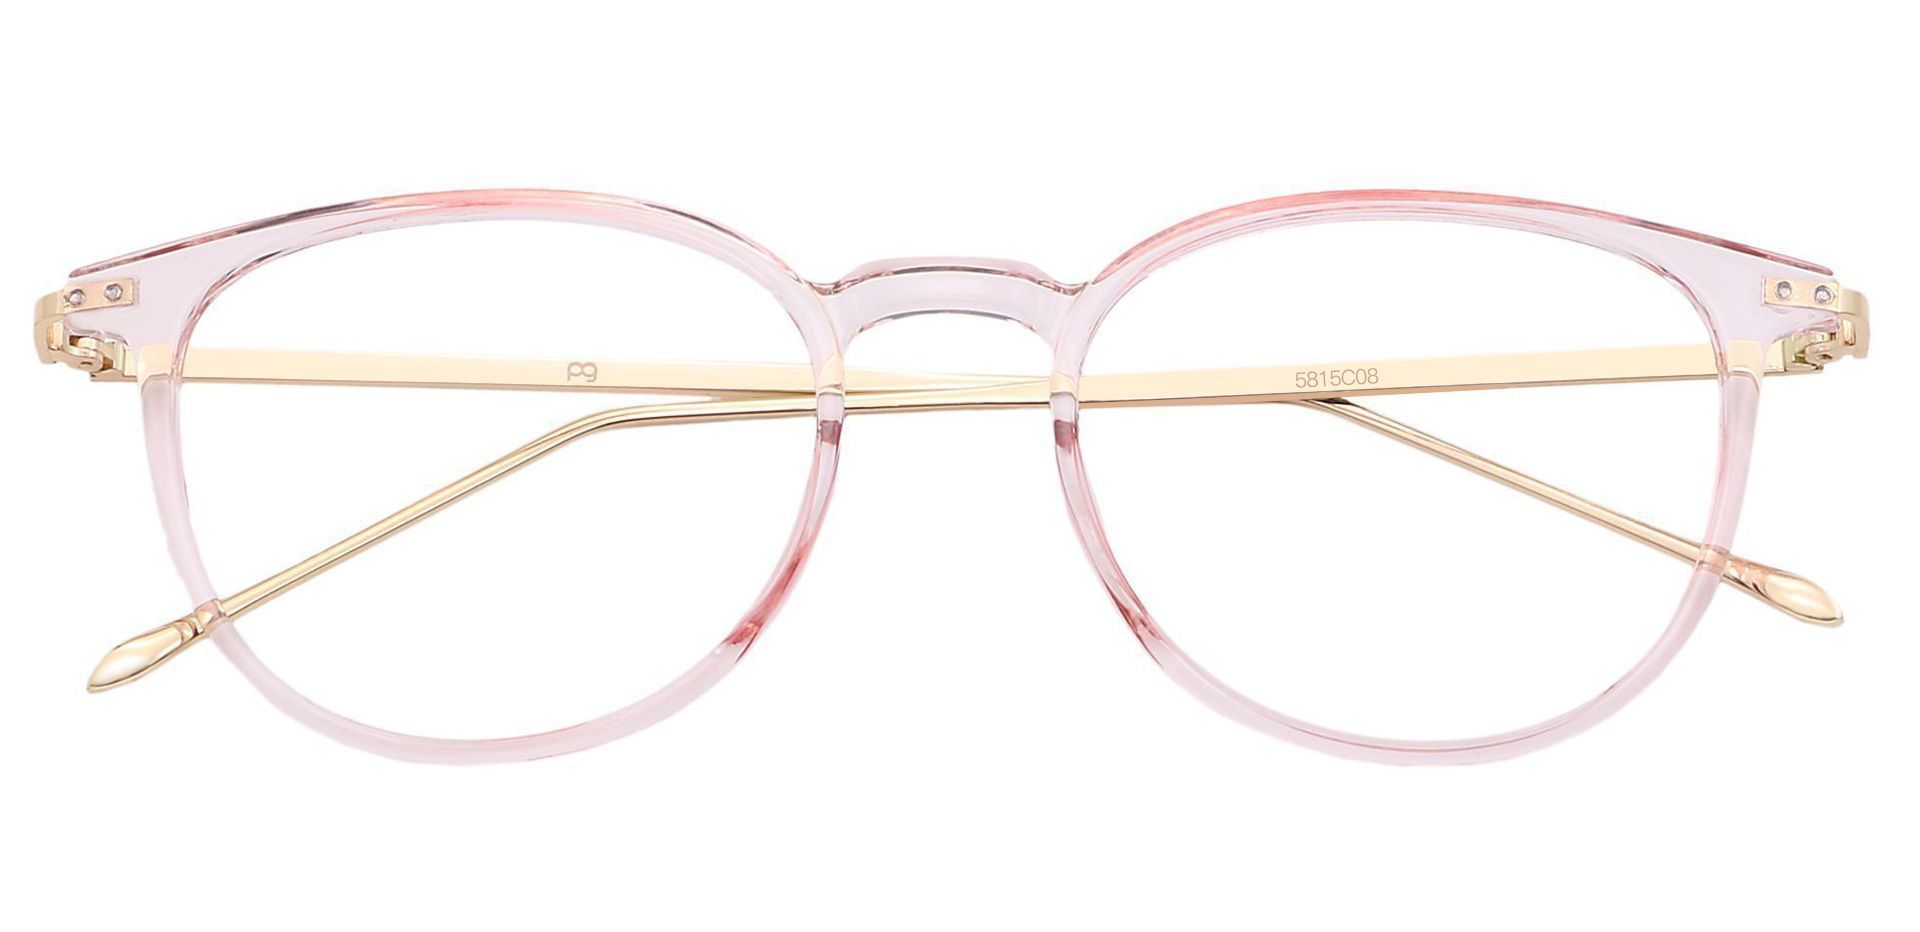 Elliott Round Prescription Glasses - Pink